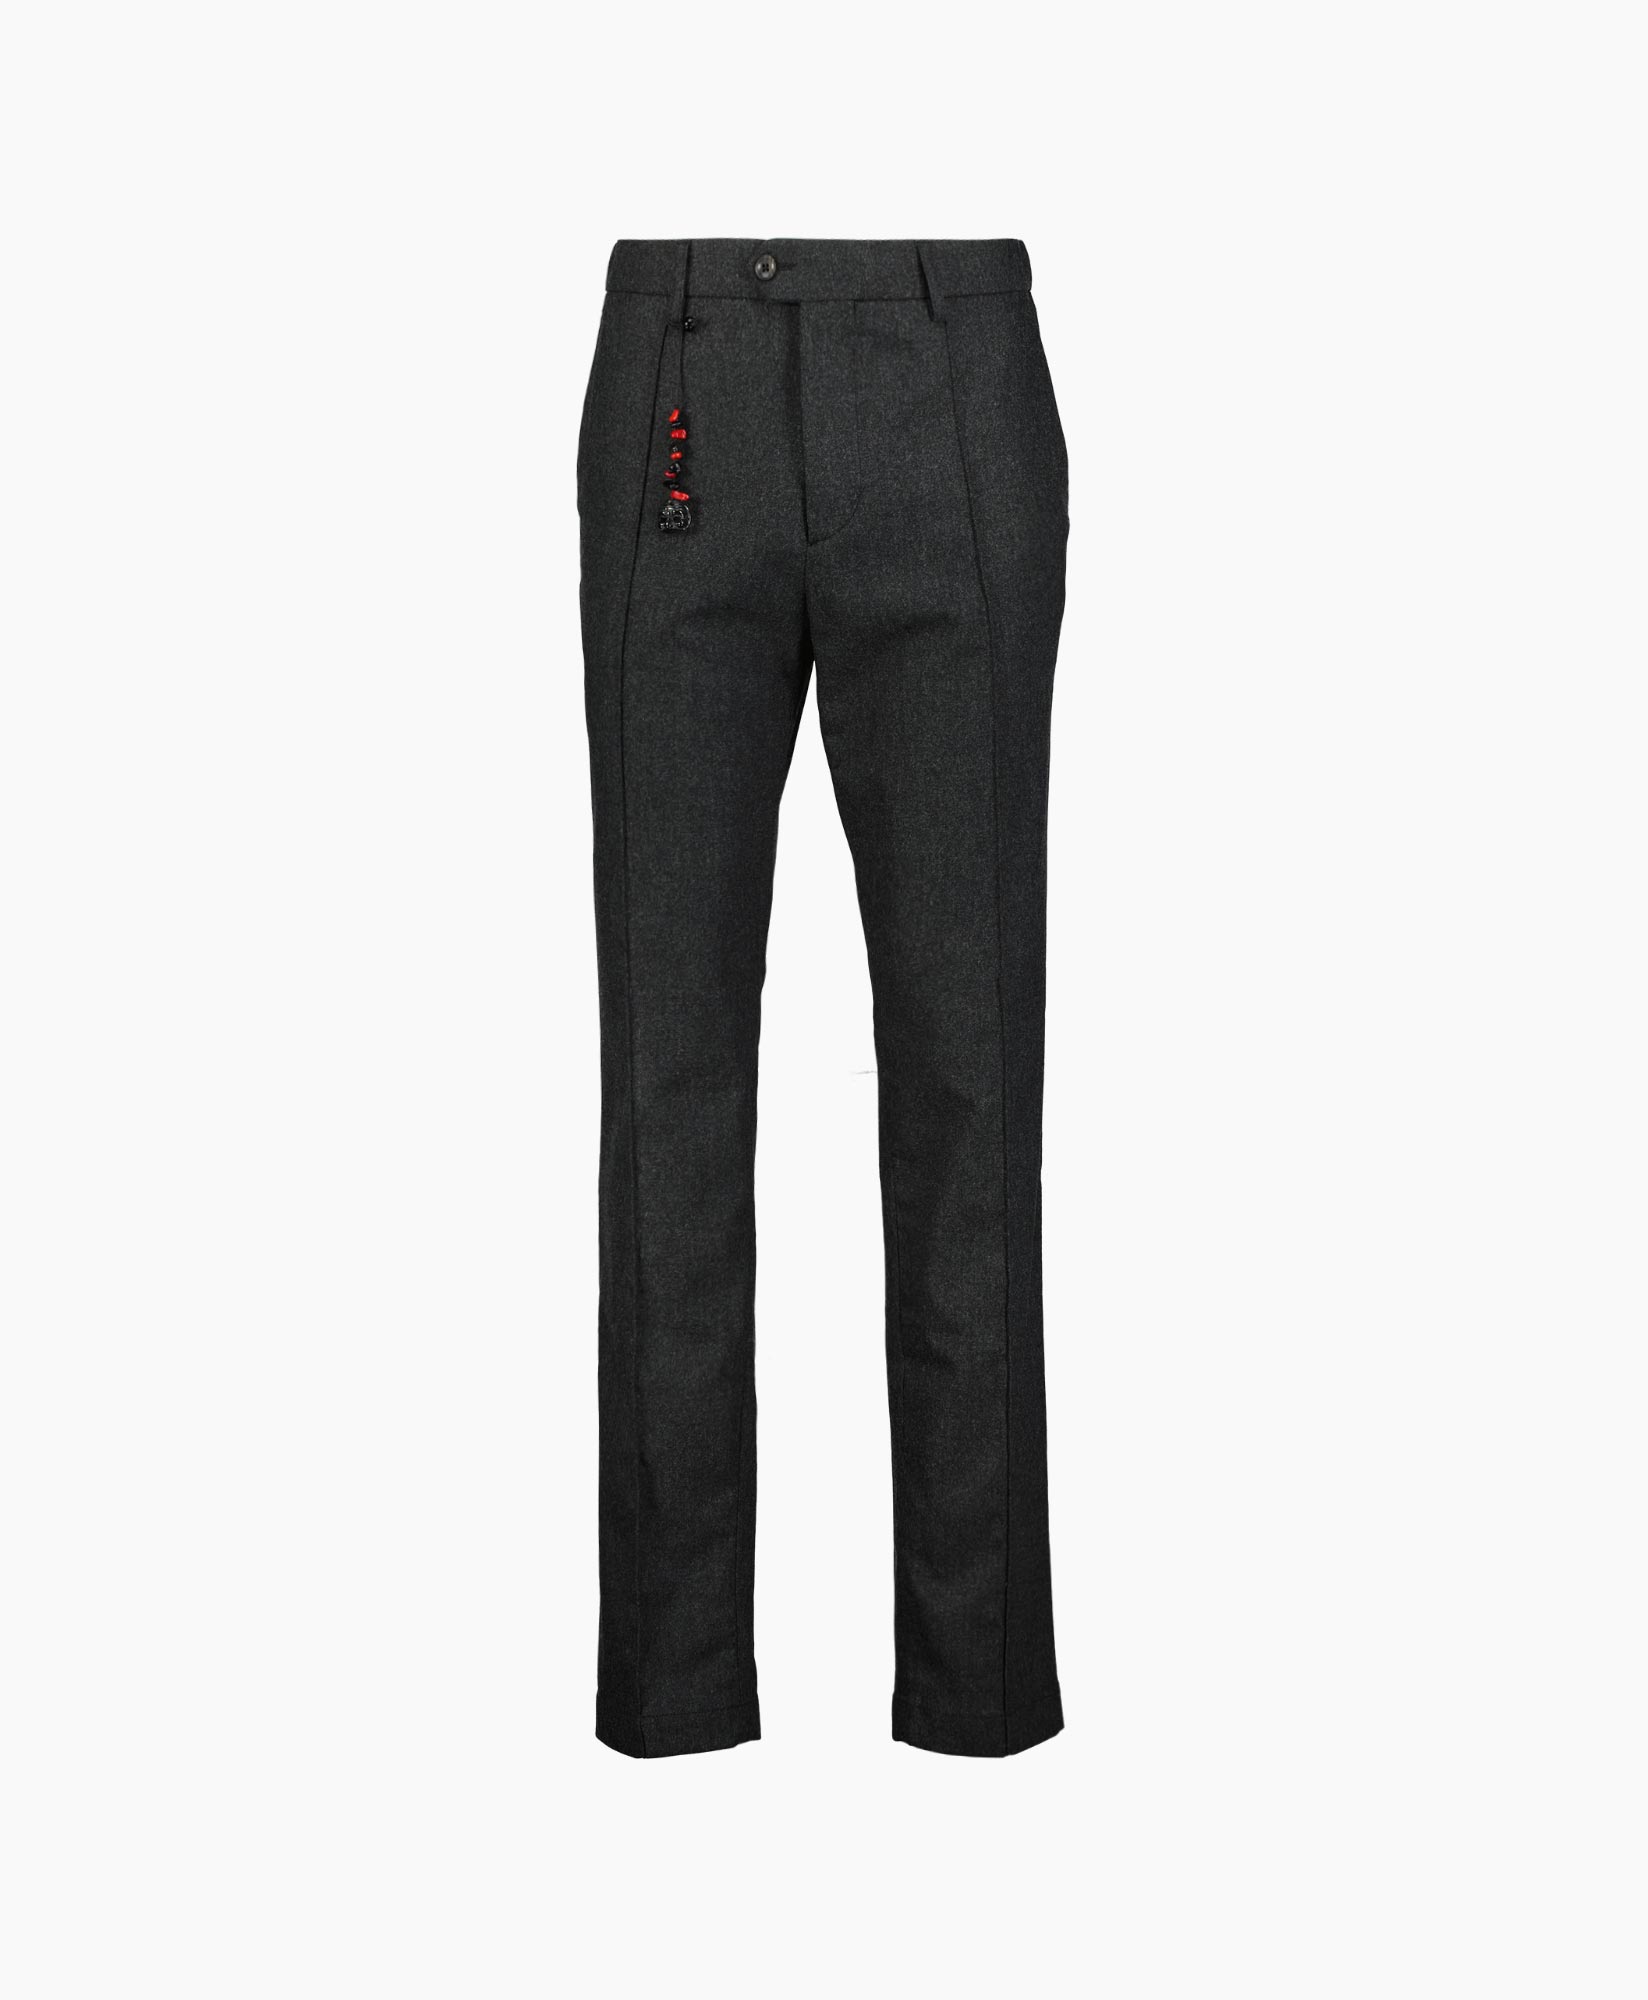 Pantalon Bros Zip 4829 Donkergrijs